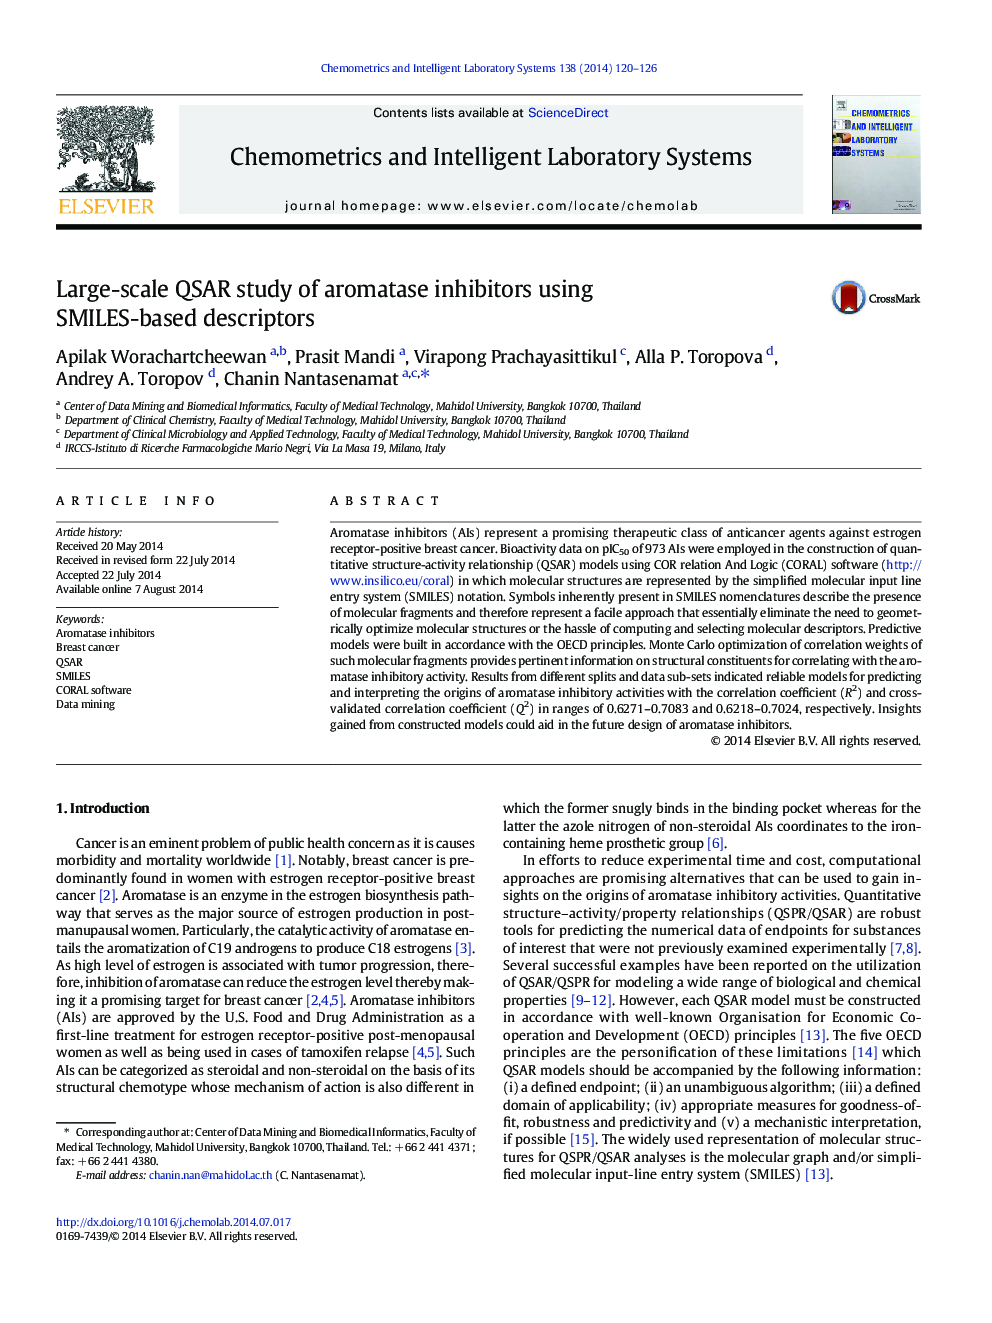 Large-scale QSAR study of aromatase inhibitors using SMILES-based descriptors